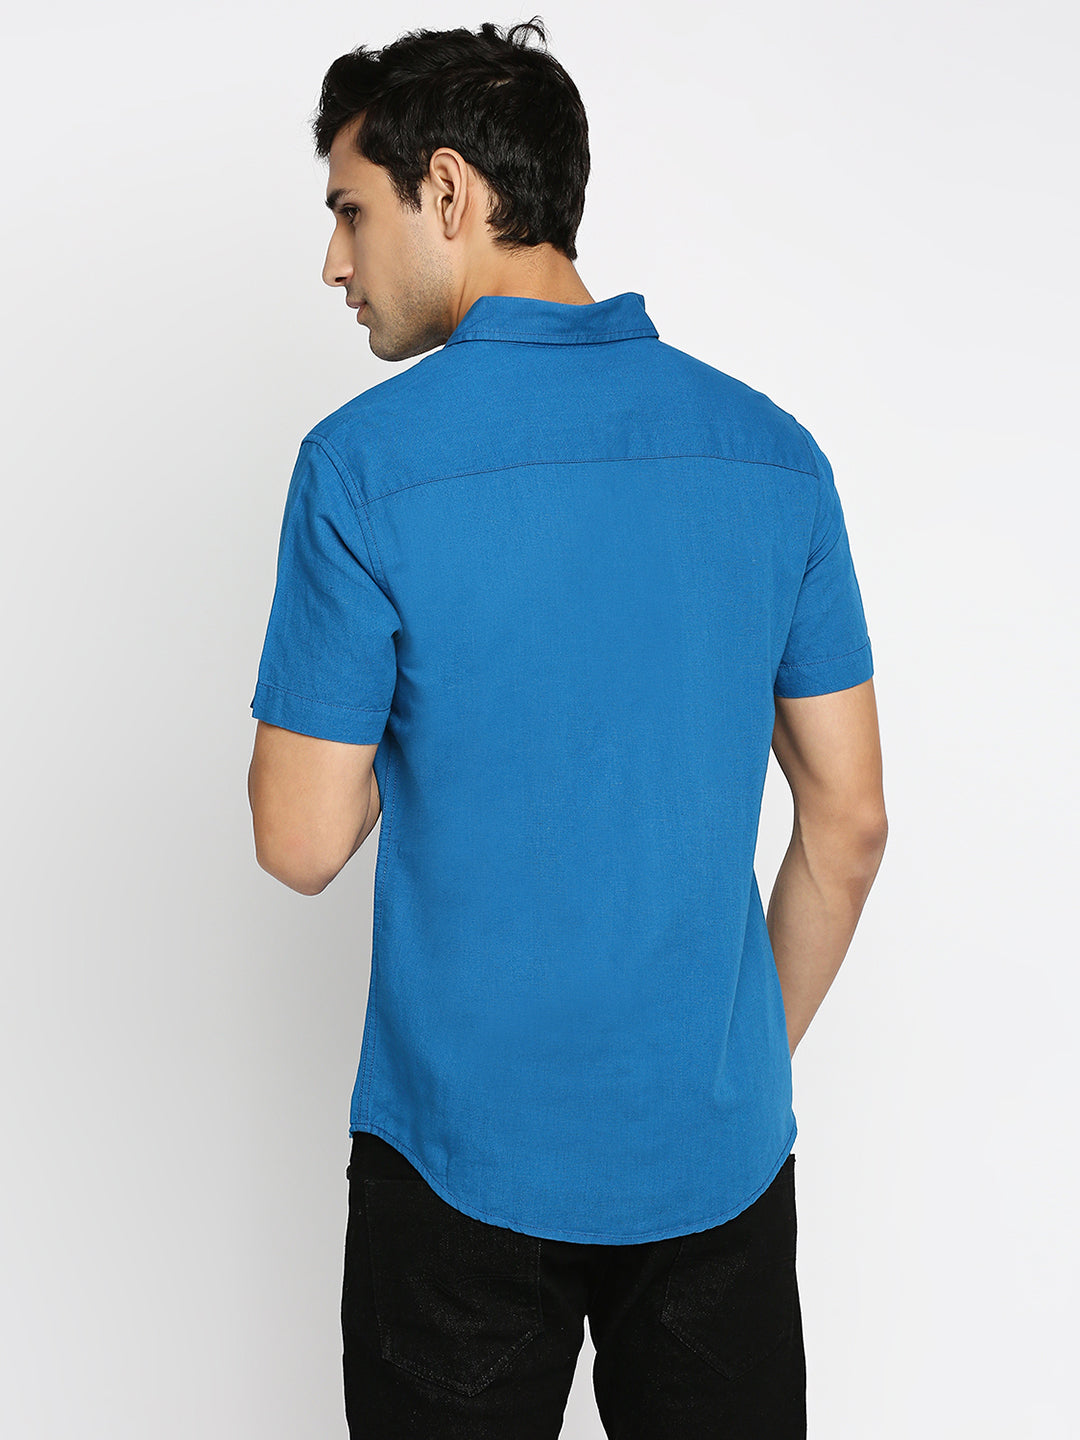 Absolute Linen Cotton Blue Slim Fit Shirt